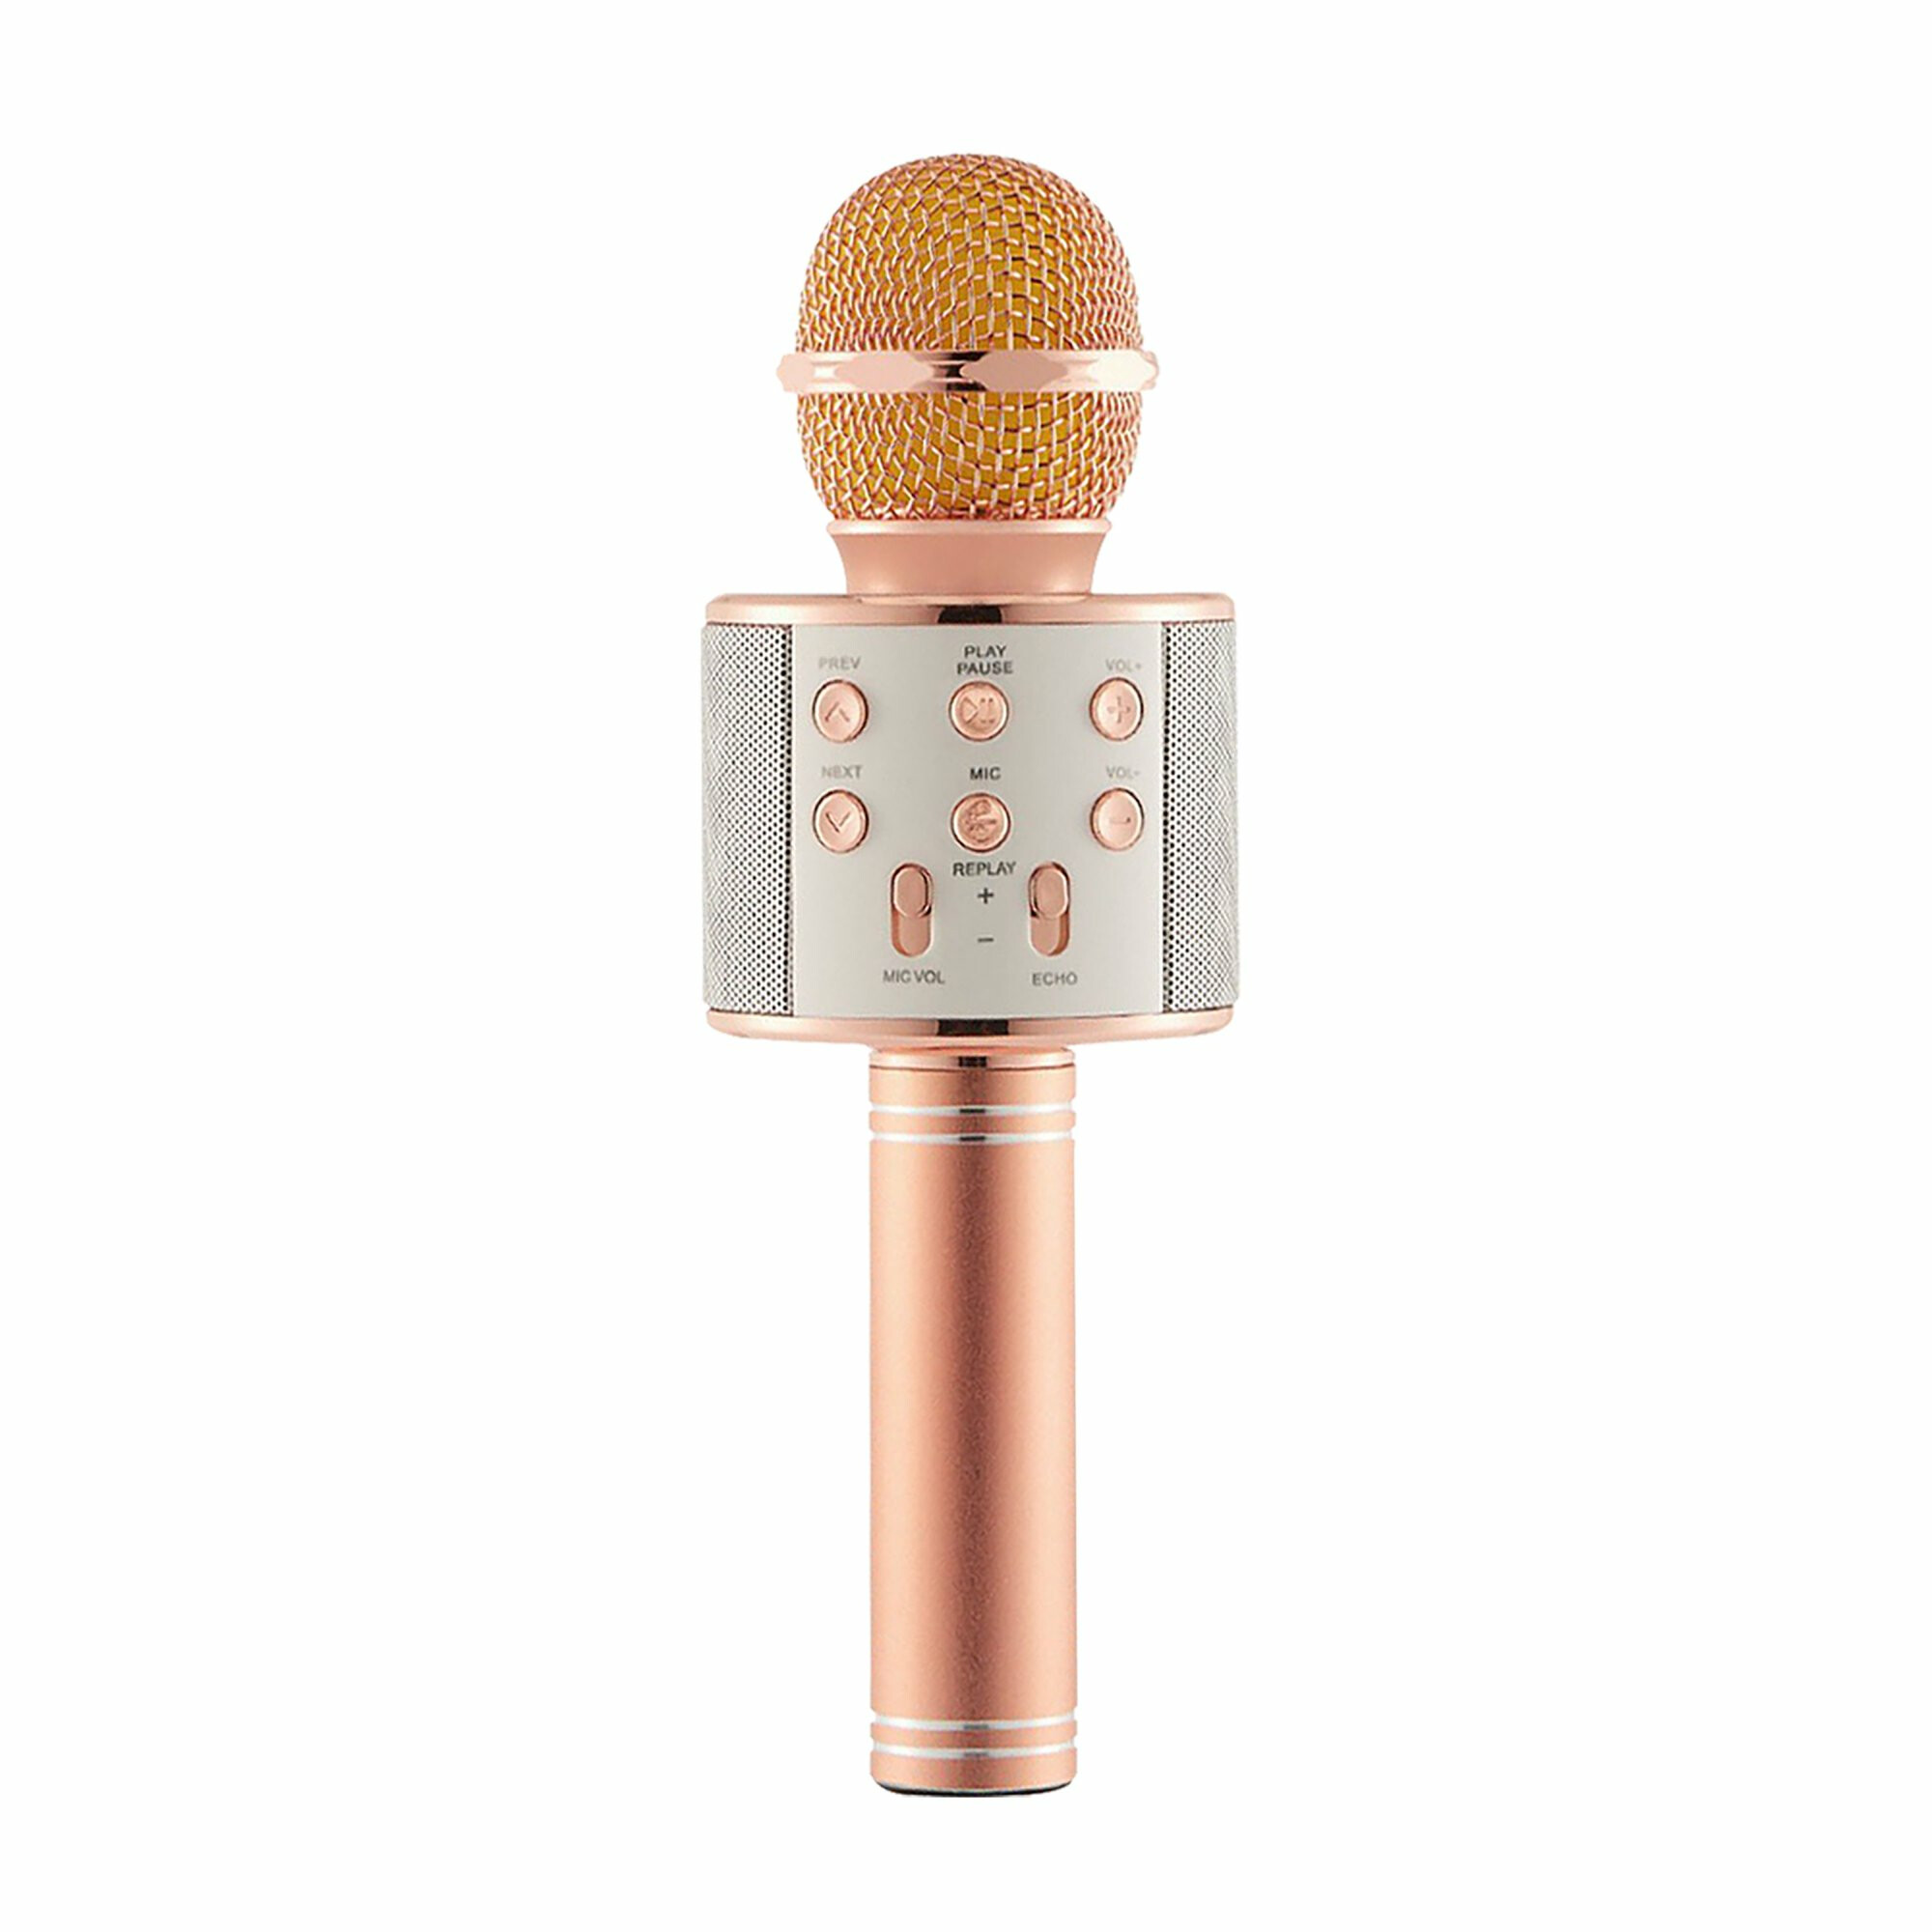 Jamsonic KBT-010 Karaoke Microphone